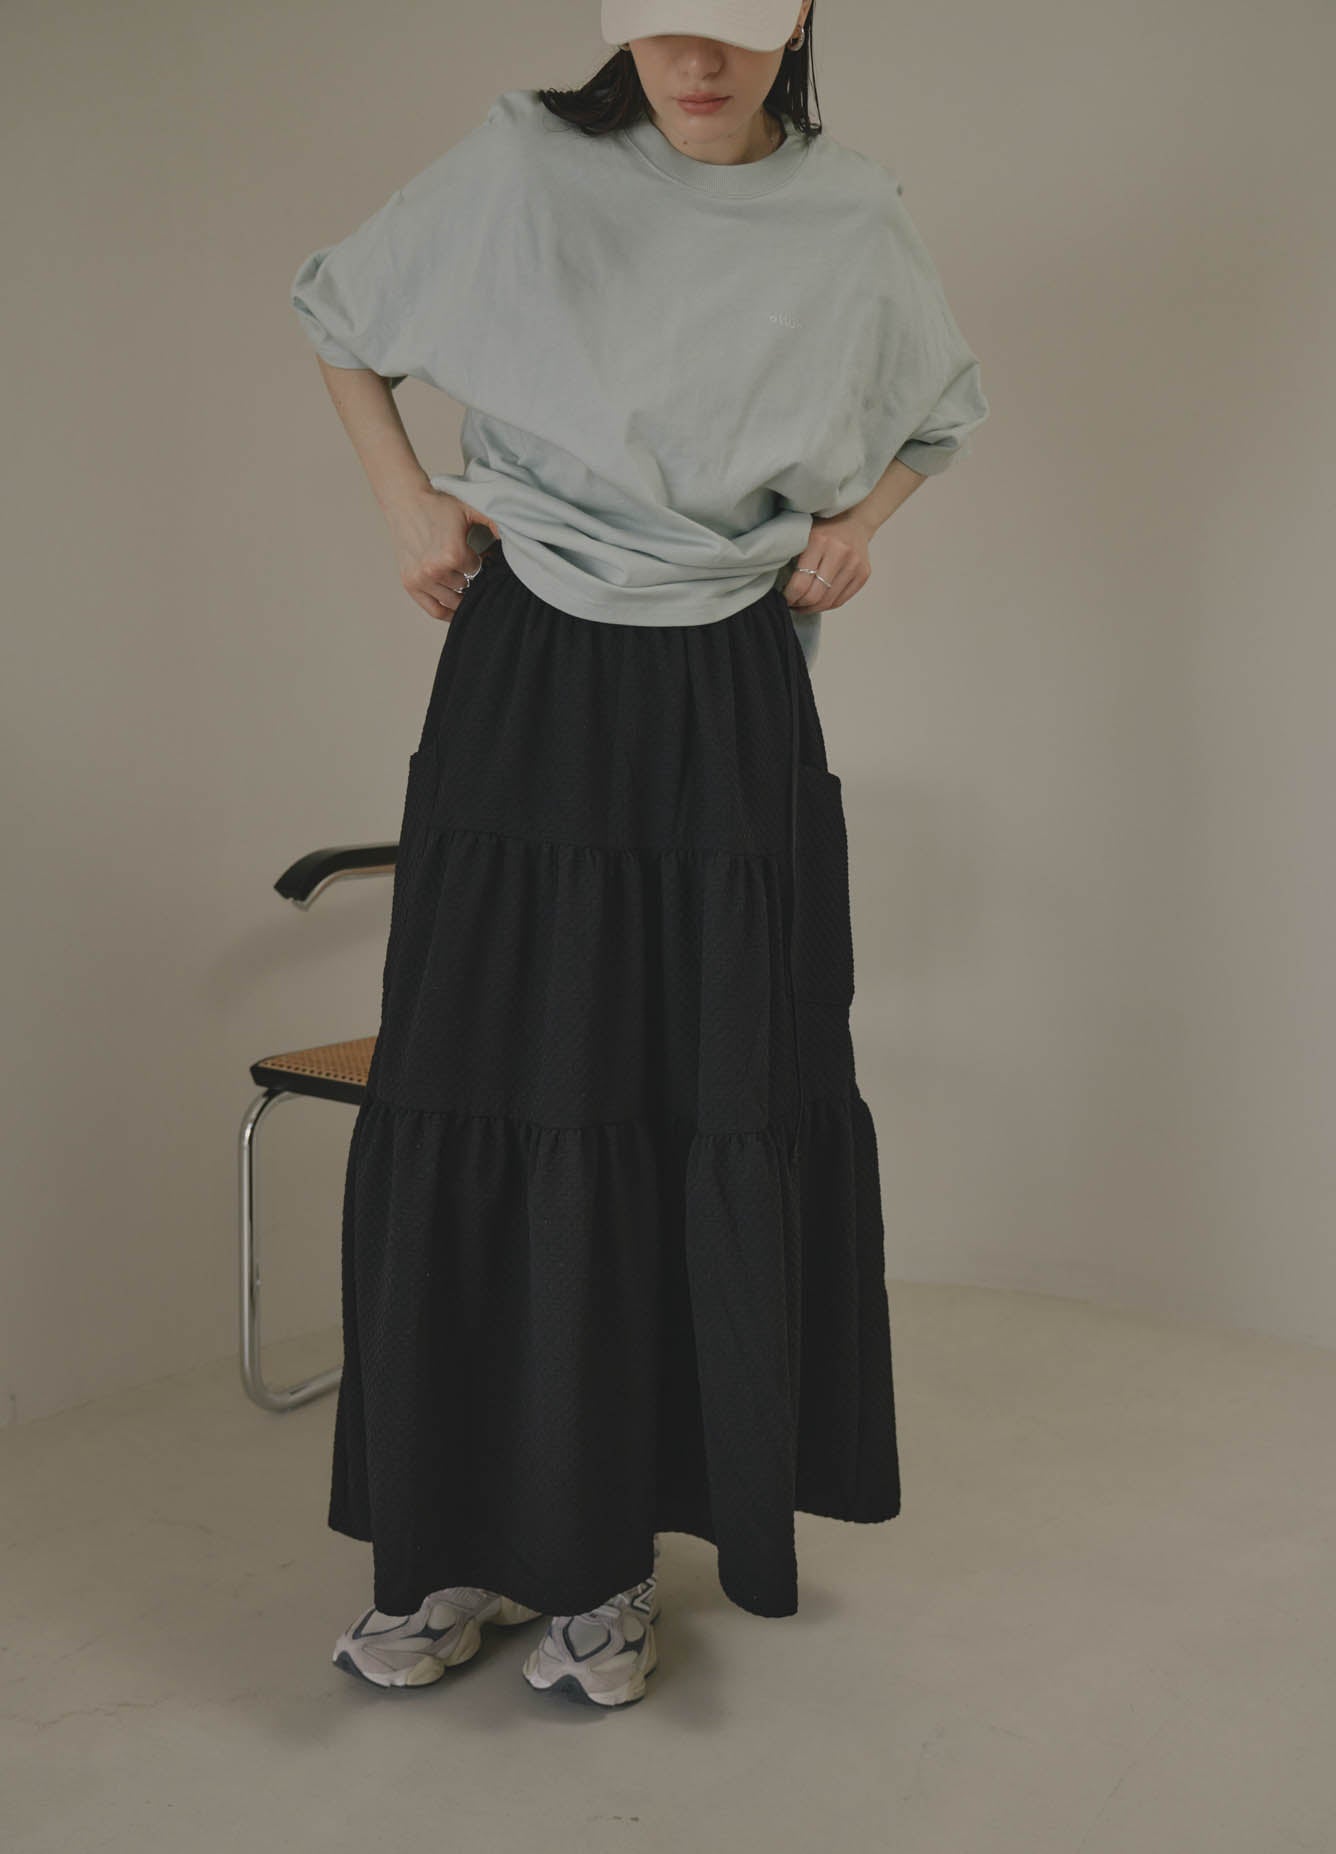 pocopoco tiered skirt